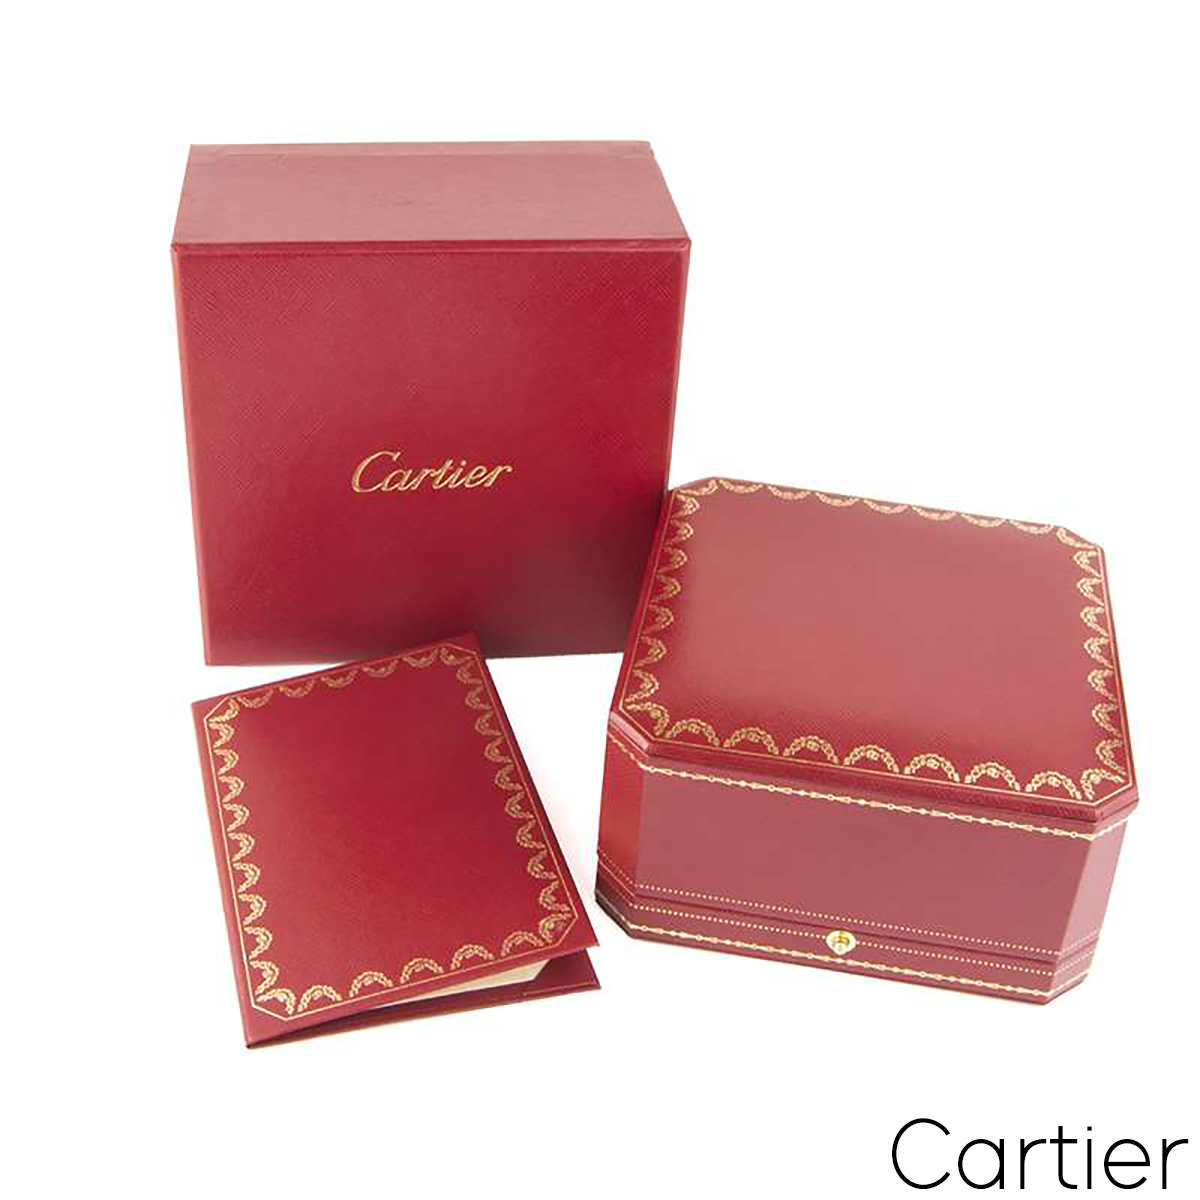 Cartier Rose Gold Half Diamond & Pink Sapphire Love Bracelet Size 17 N6705917